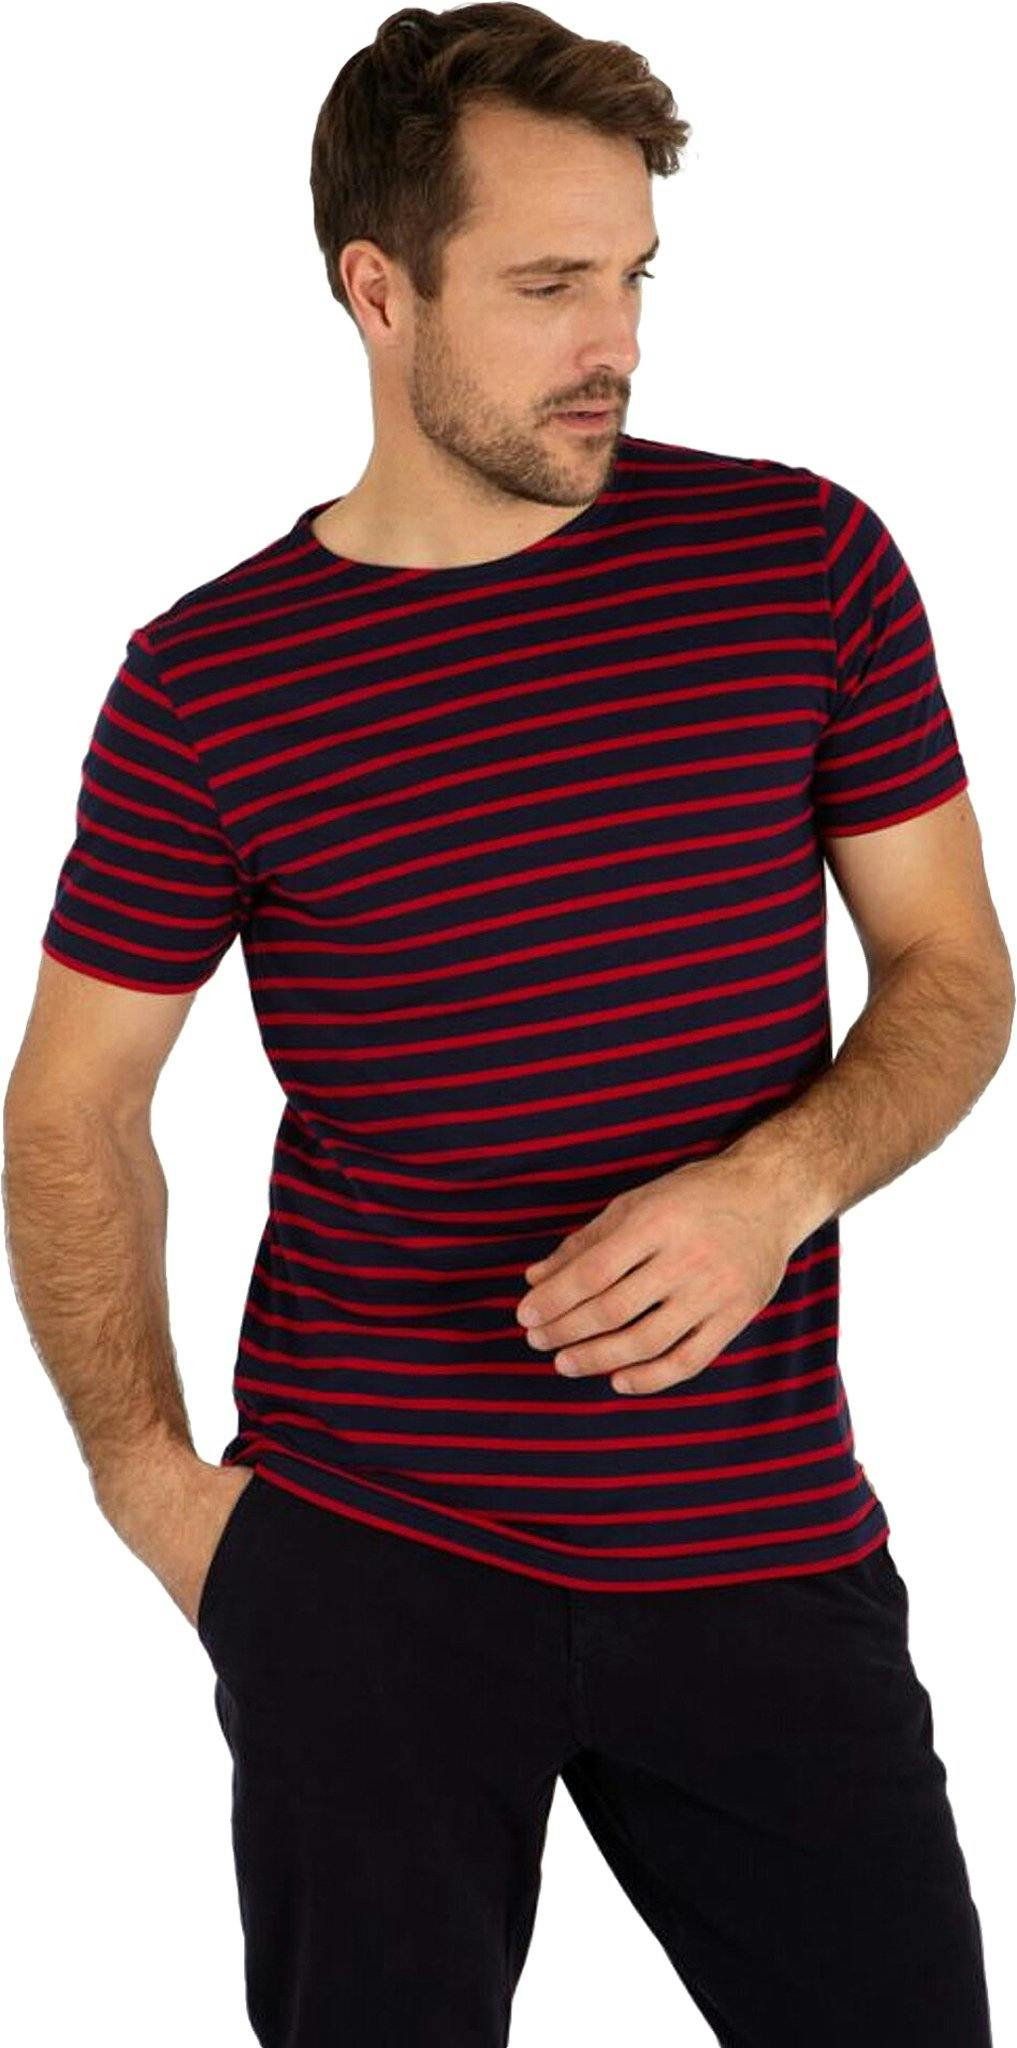 Product image for Hoëdic Light Cotton Breton Striped Jersey - Men's